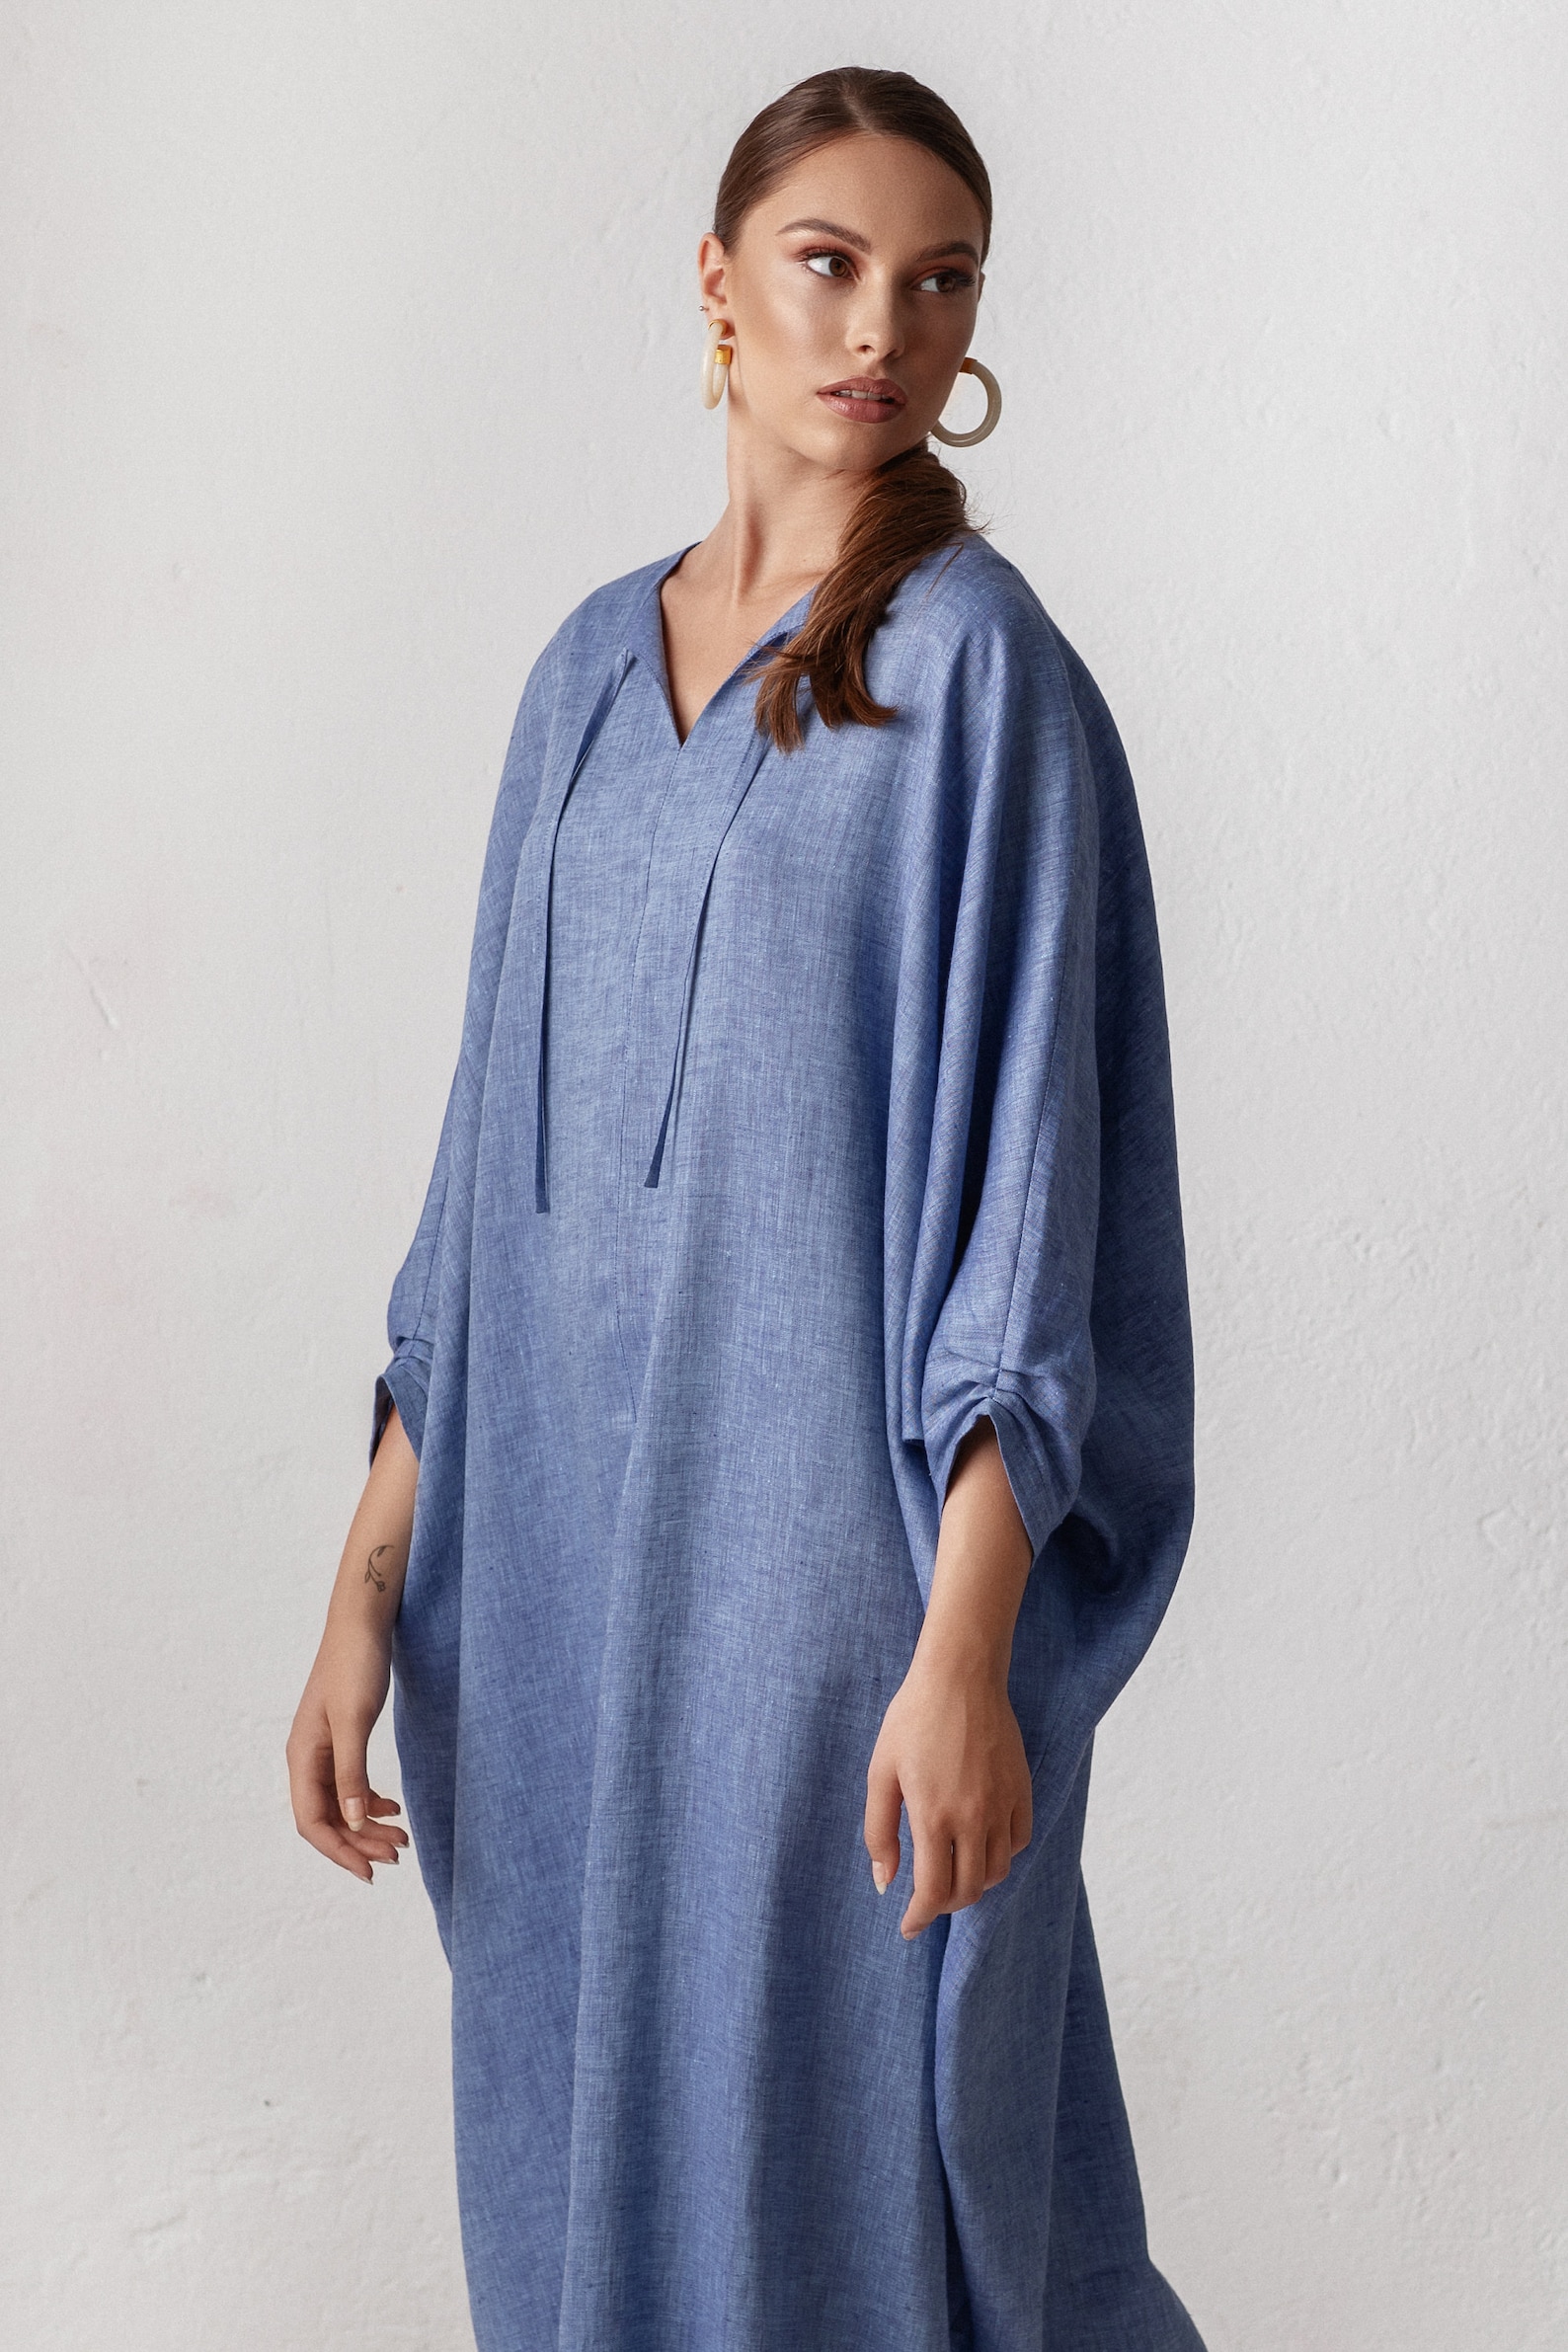 Linen Kaftan Dress With Sleeves Caftan Plus Size Maxi Dress | Etsy